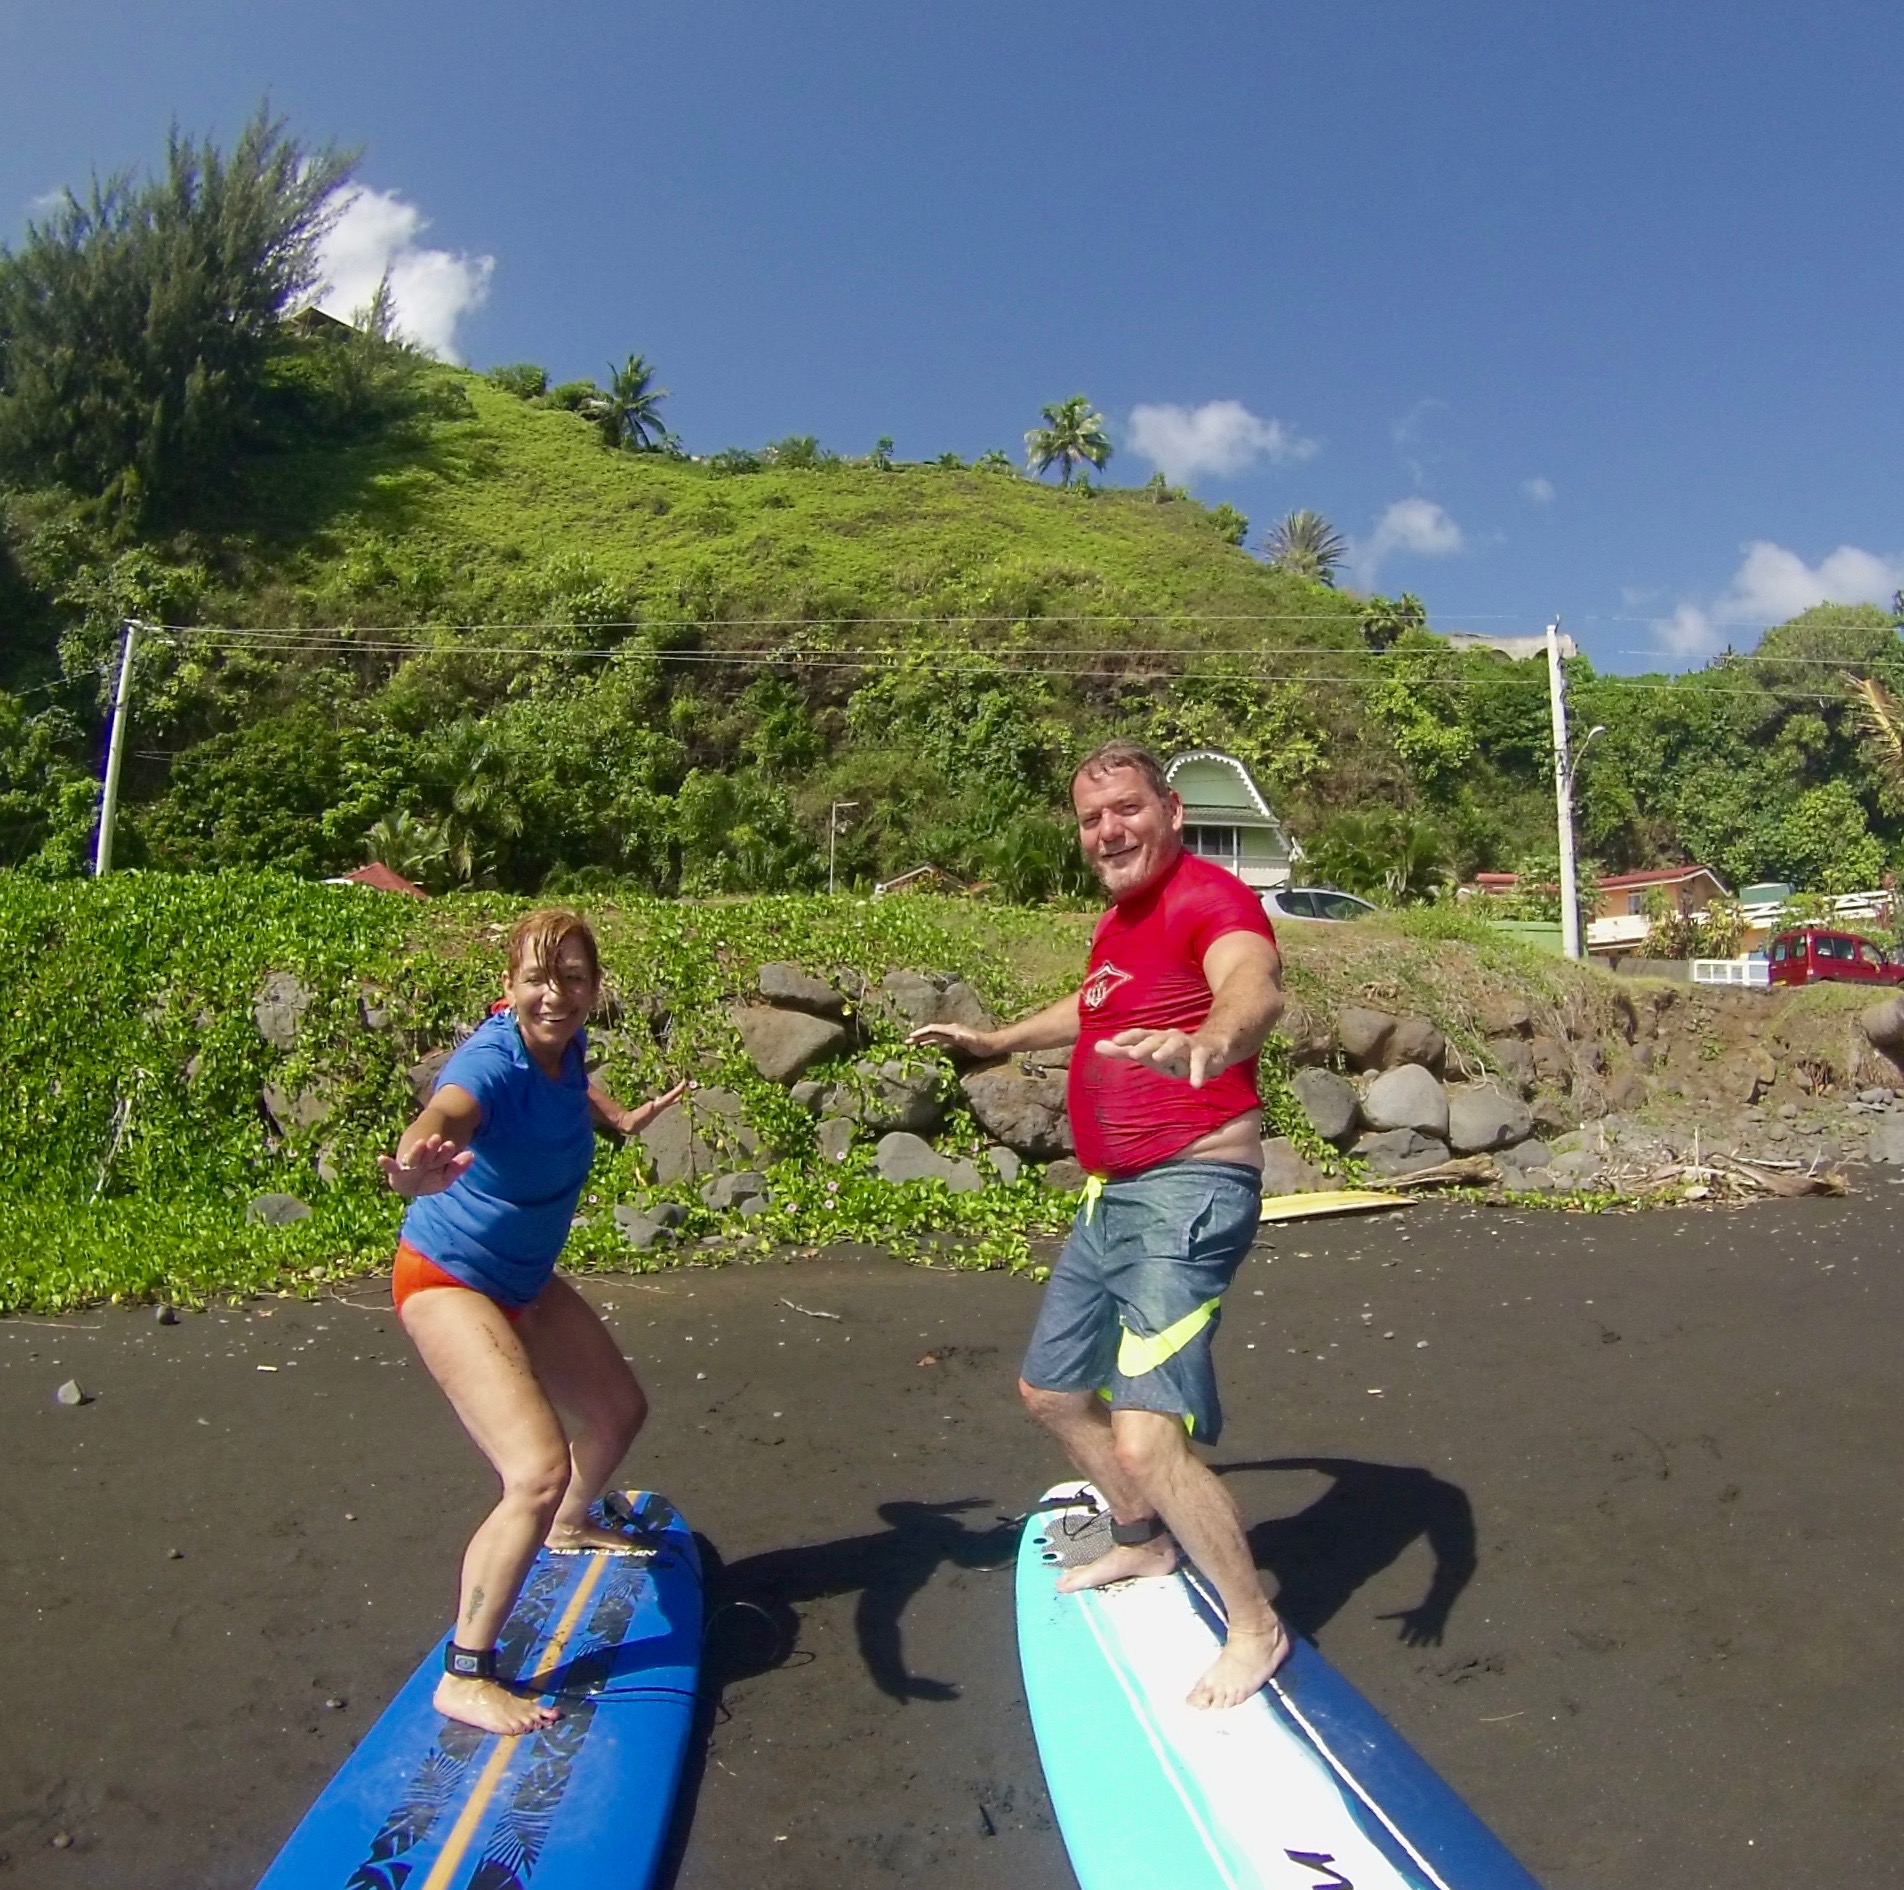 Cours de surf à Tahiti avec Mo'o Surf School - surf classes in Tahiti